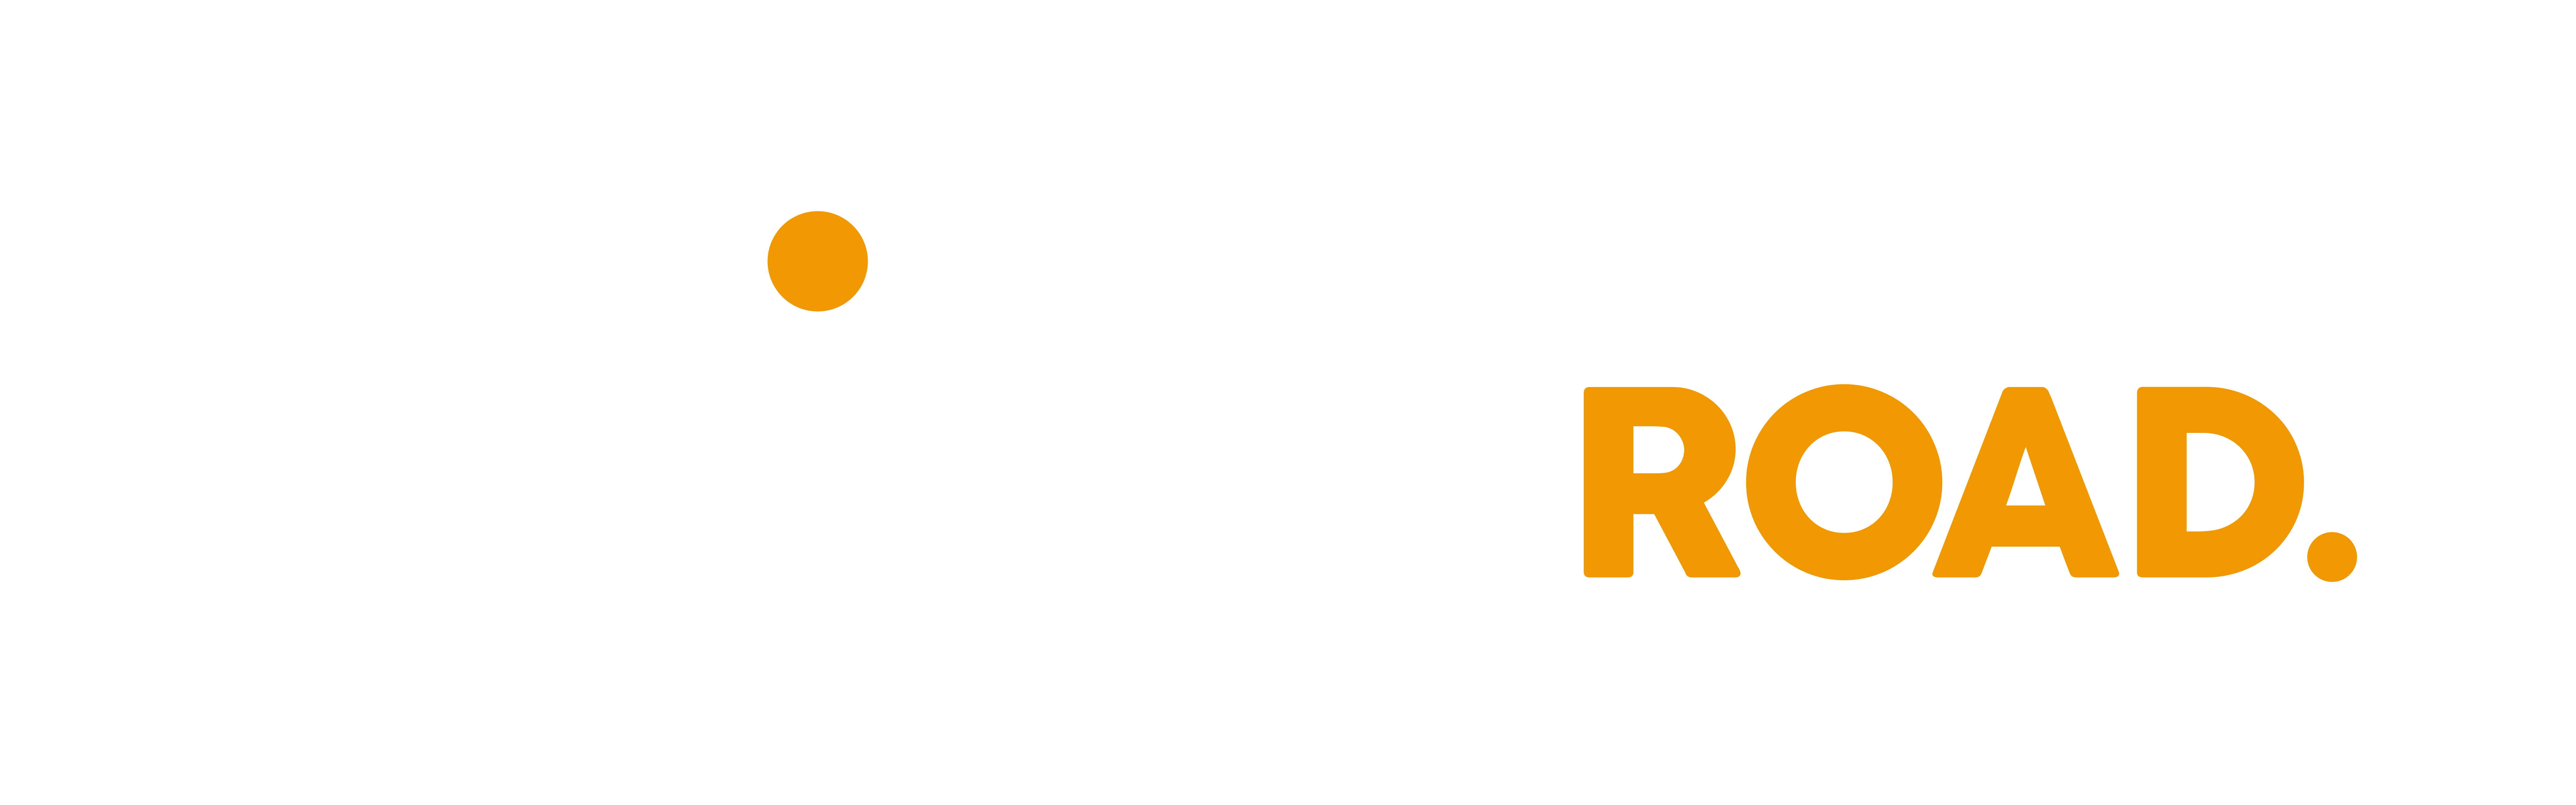 Blink Road